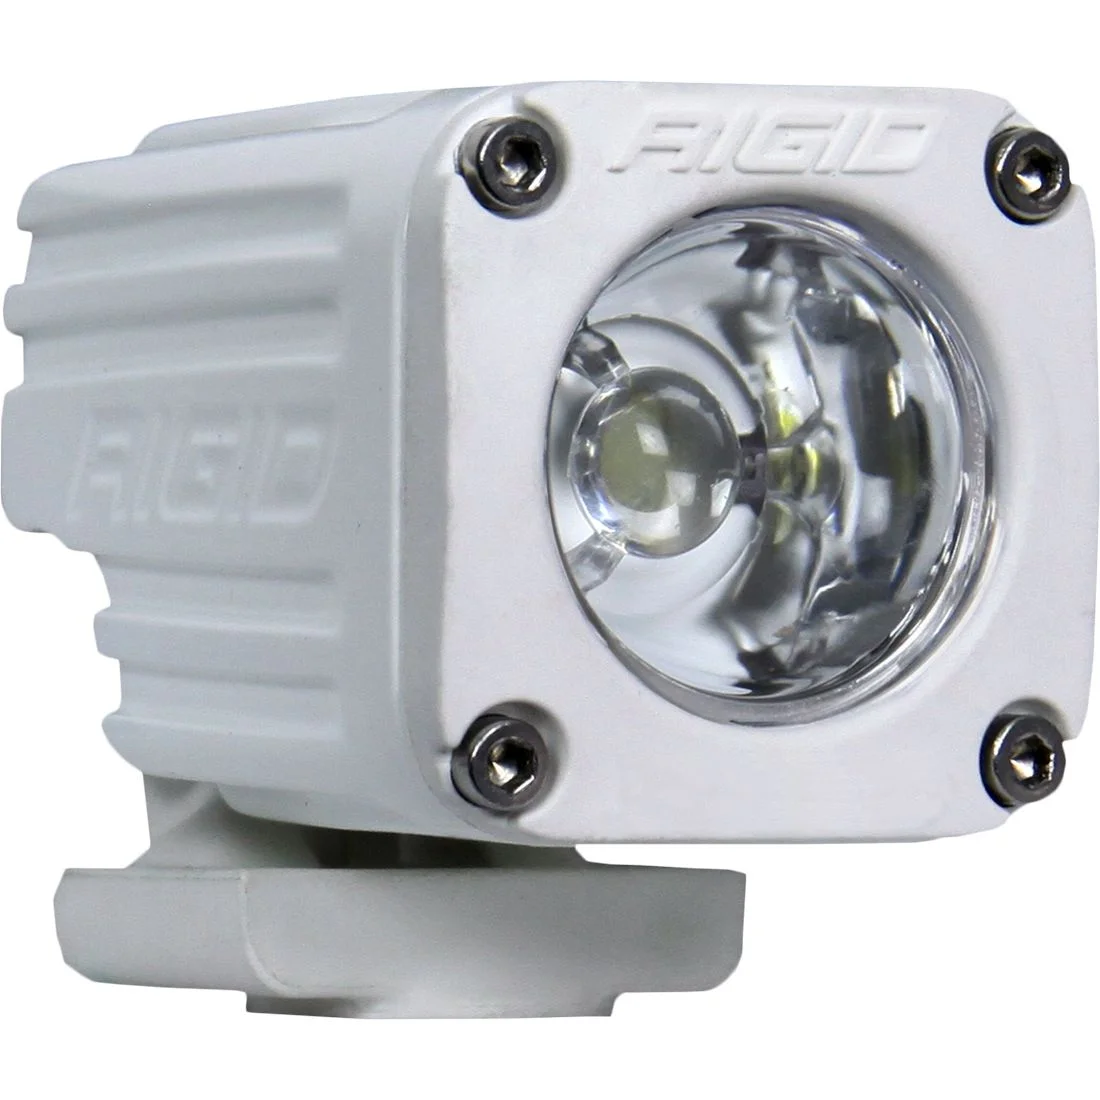 Rigid Industries IGNITE Series LED Lights (Sold Individually)